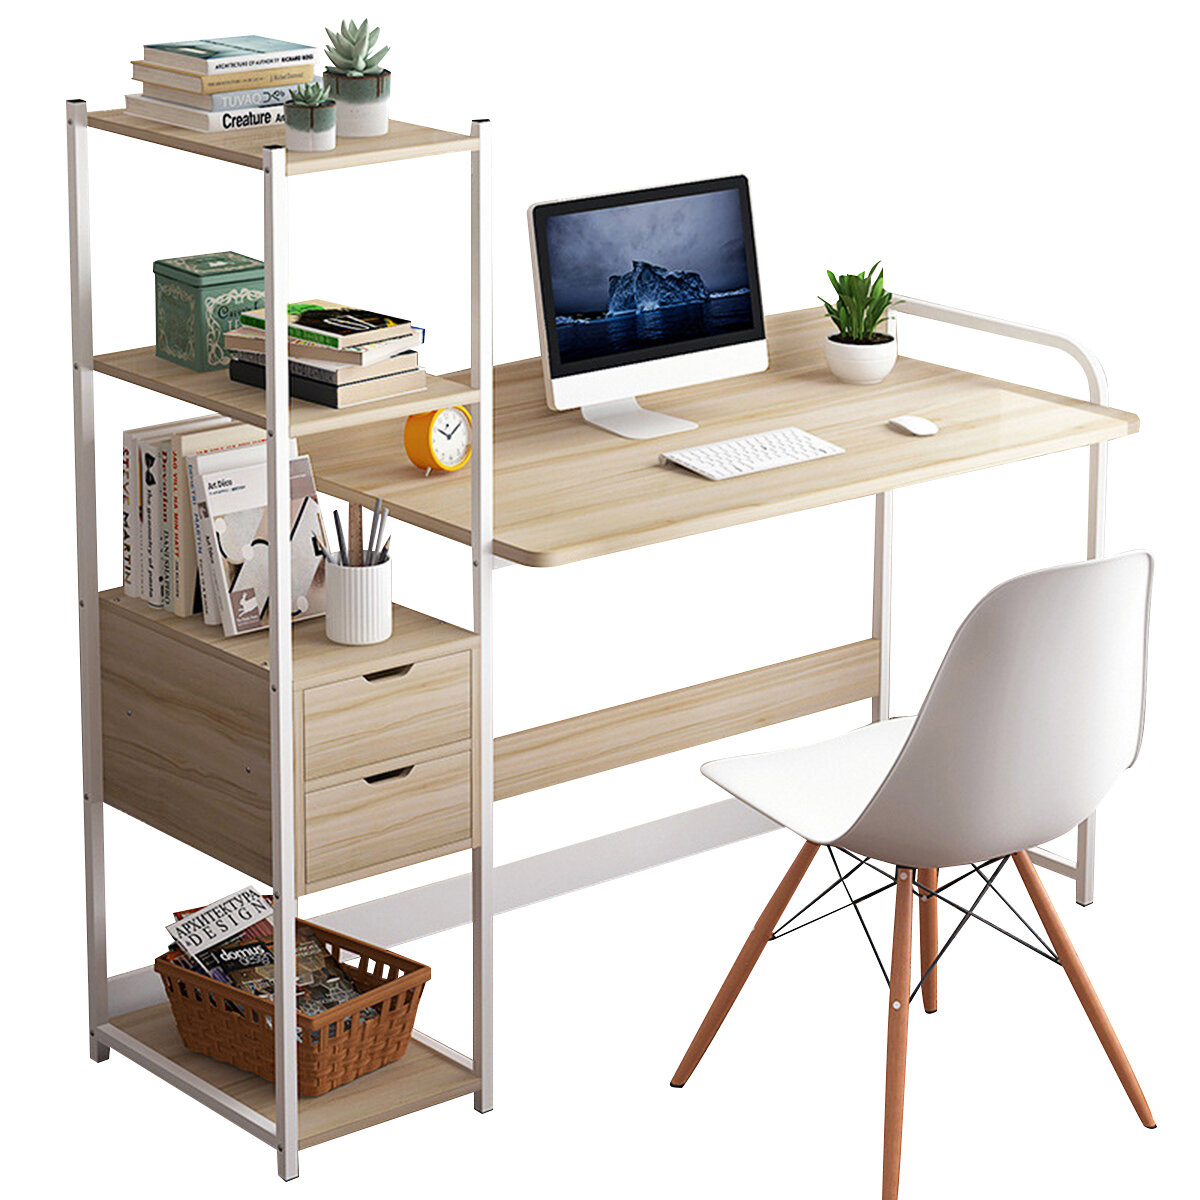 Image of Computer Laptop Desk Writing Study Table Bookshelf Desktop Workstation with Storage Shelf Drawers Home Office Furniture